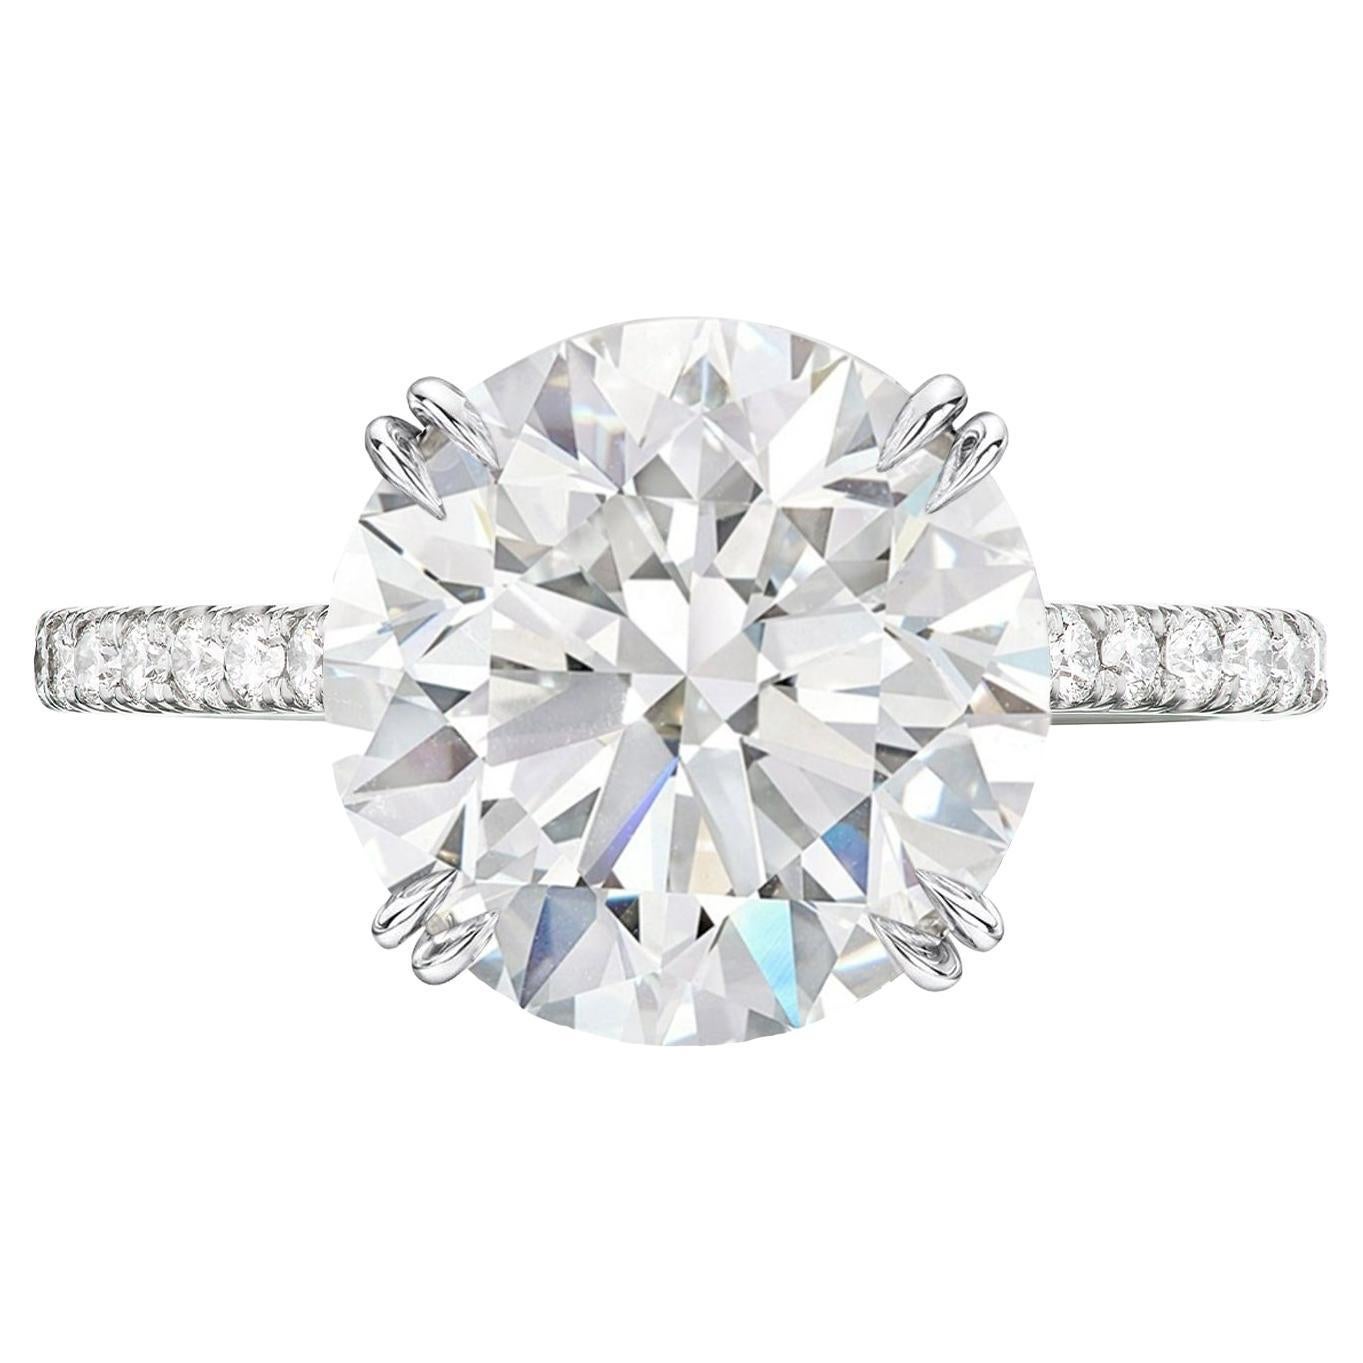 An exquisite GIA certified 5 carat round brilliant cut diamond ring 

Investment grade
D COLOR
VVS2 CLARITY
FAINT FLUORESCENCE
TRIPLE EXCELLENT
